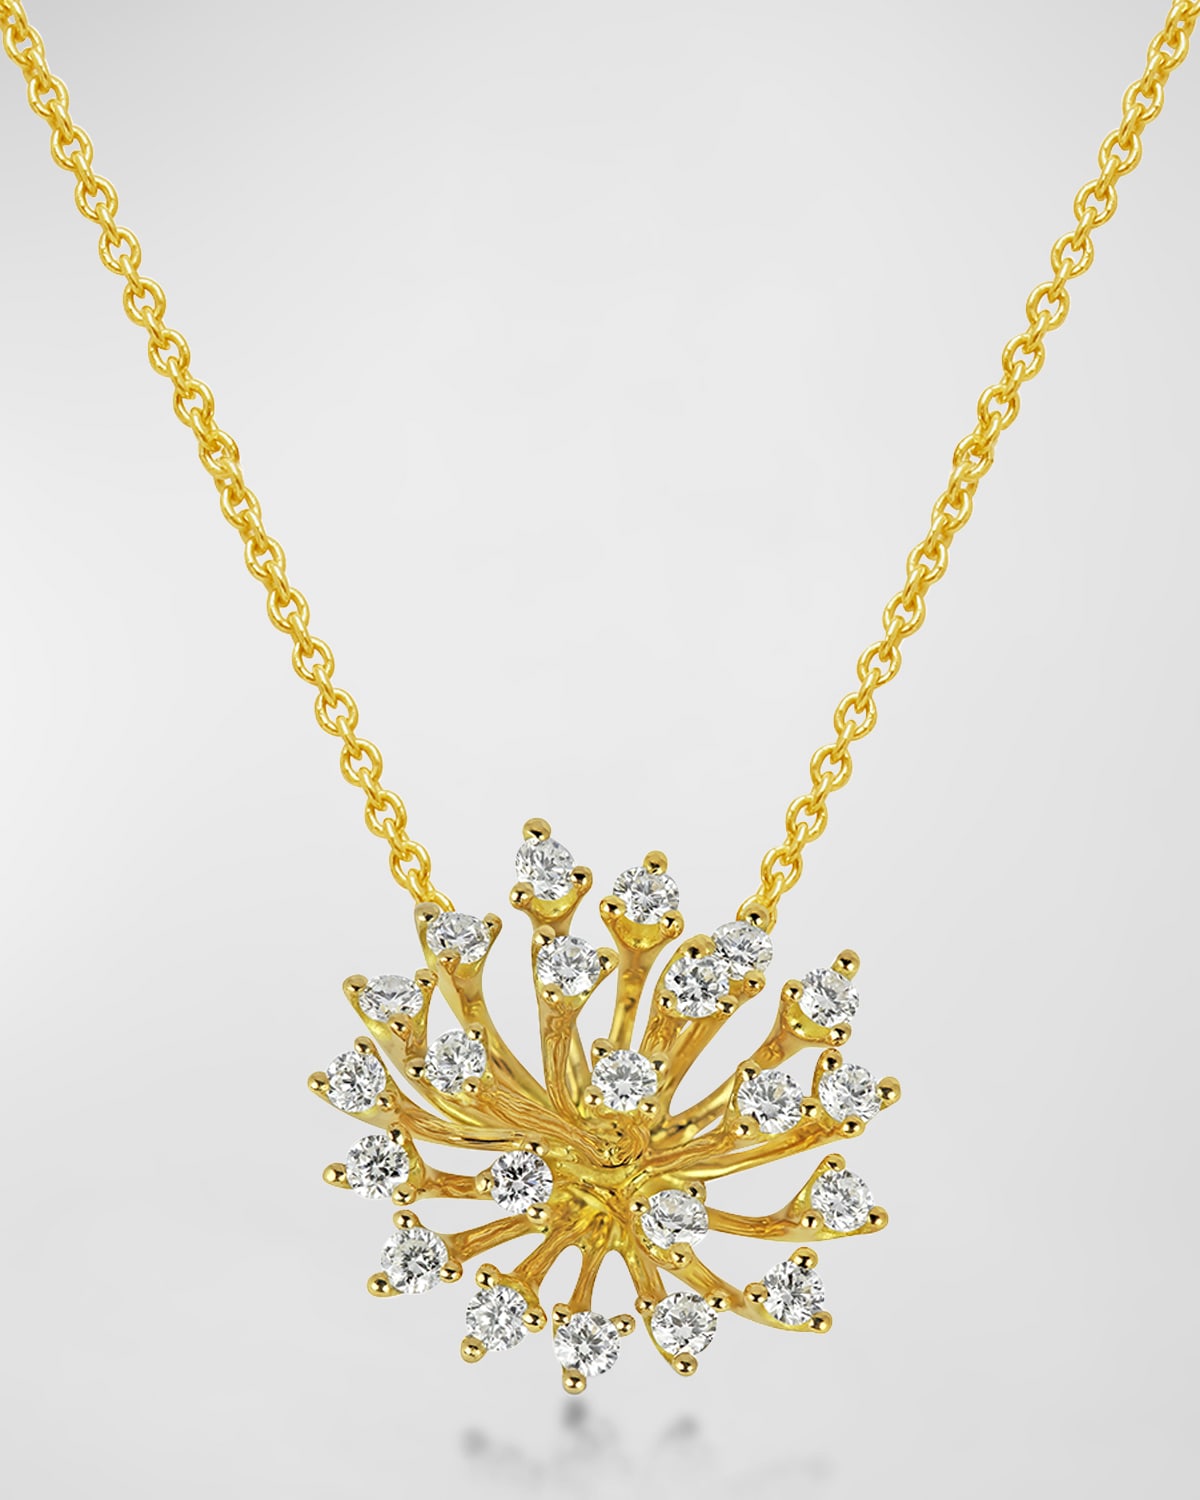 18K Luminous Gold Diamond Pendant Necklace, 18"